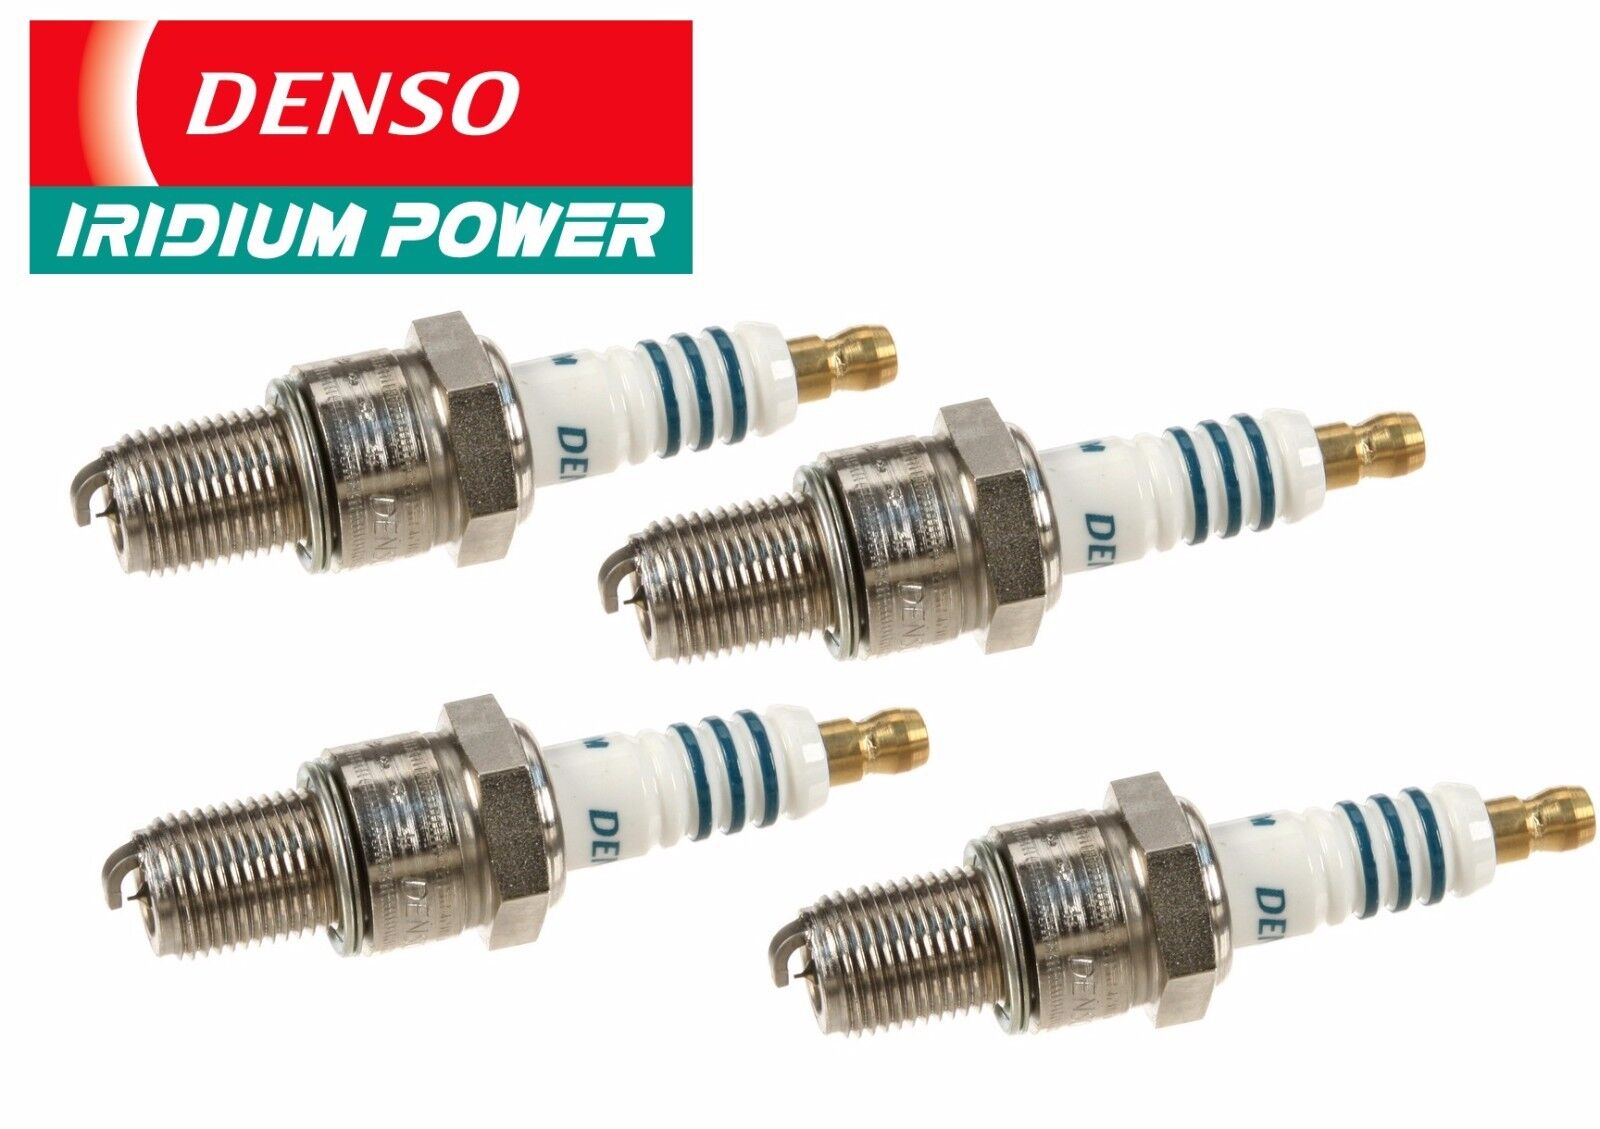 4 X DENSO IRIDIUM POWER Technologies Performance Alloy Spark Plugs IW27 # 5317